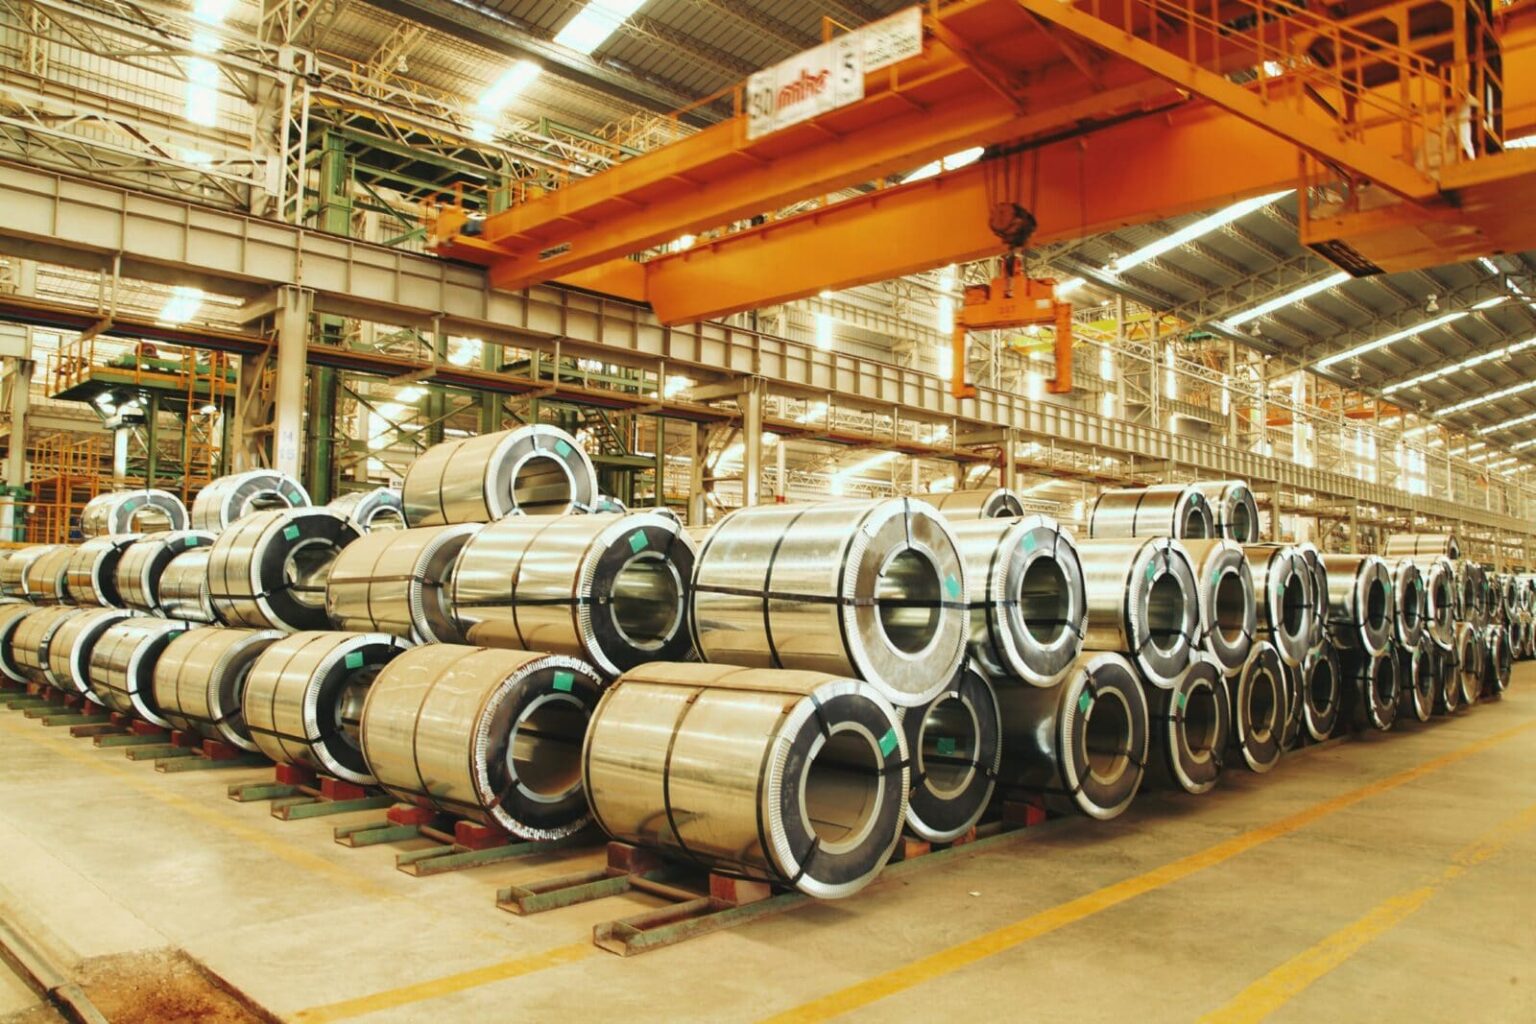 International Steels Ltd.’s Net Profit Increased by 377% in Q1 FY2022